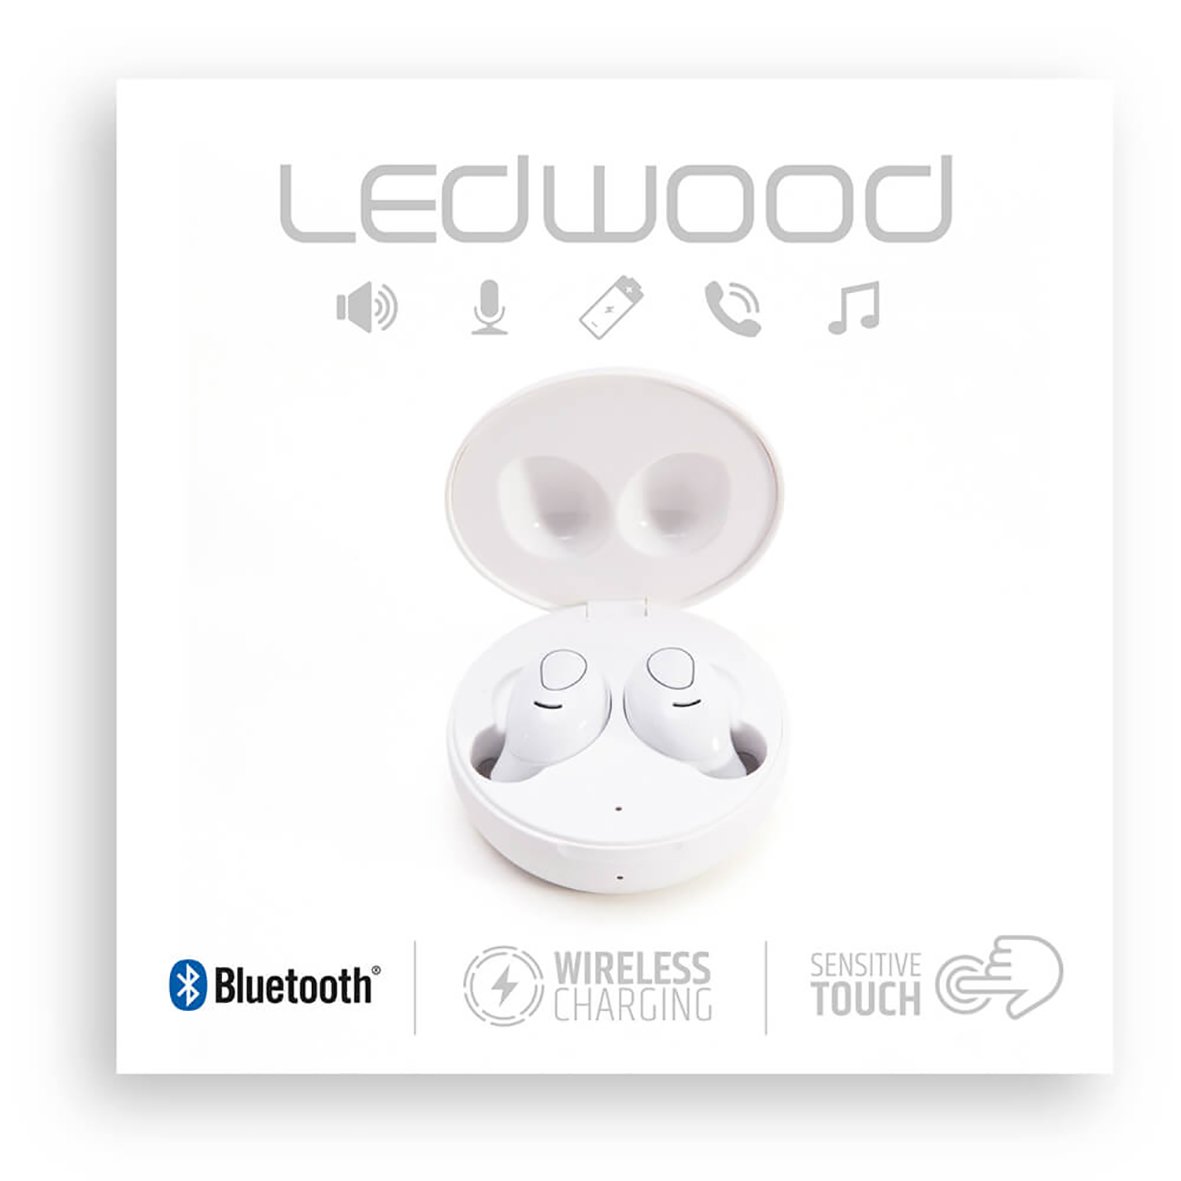 Hörlurar Ledwood i9 TWS In-ear vit 34044294_3